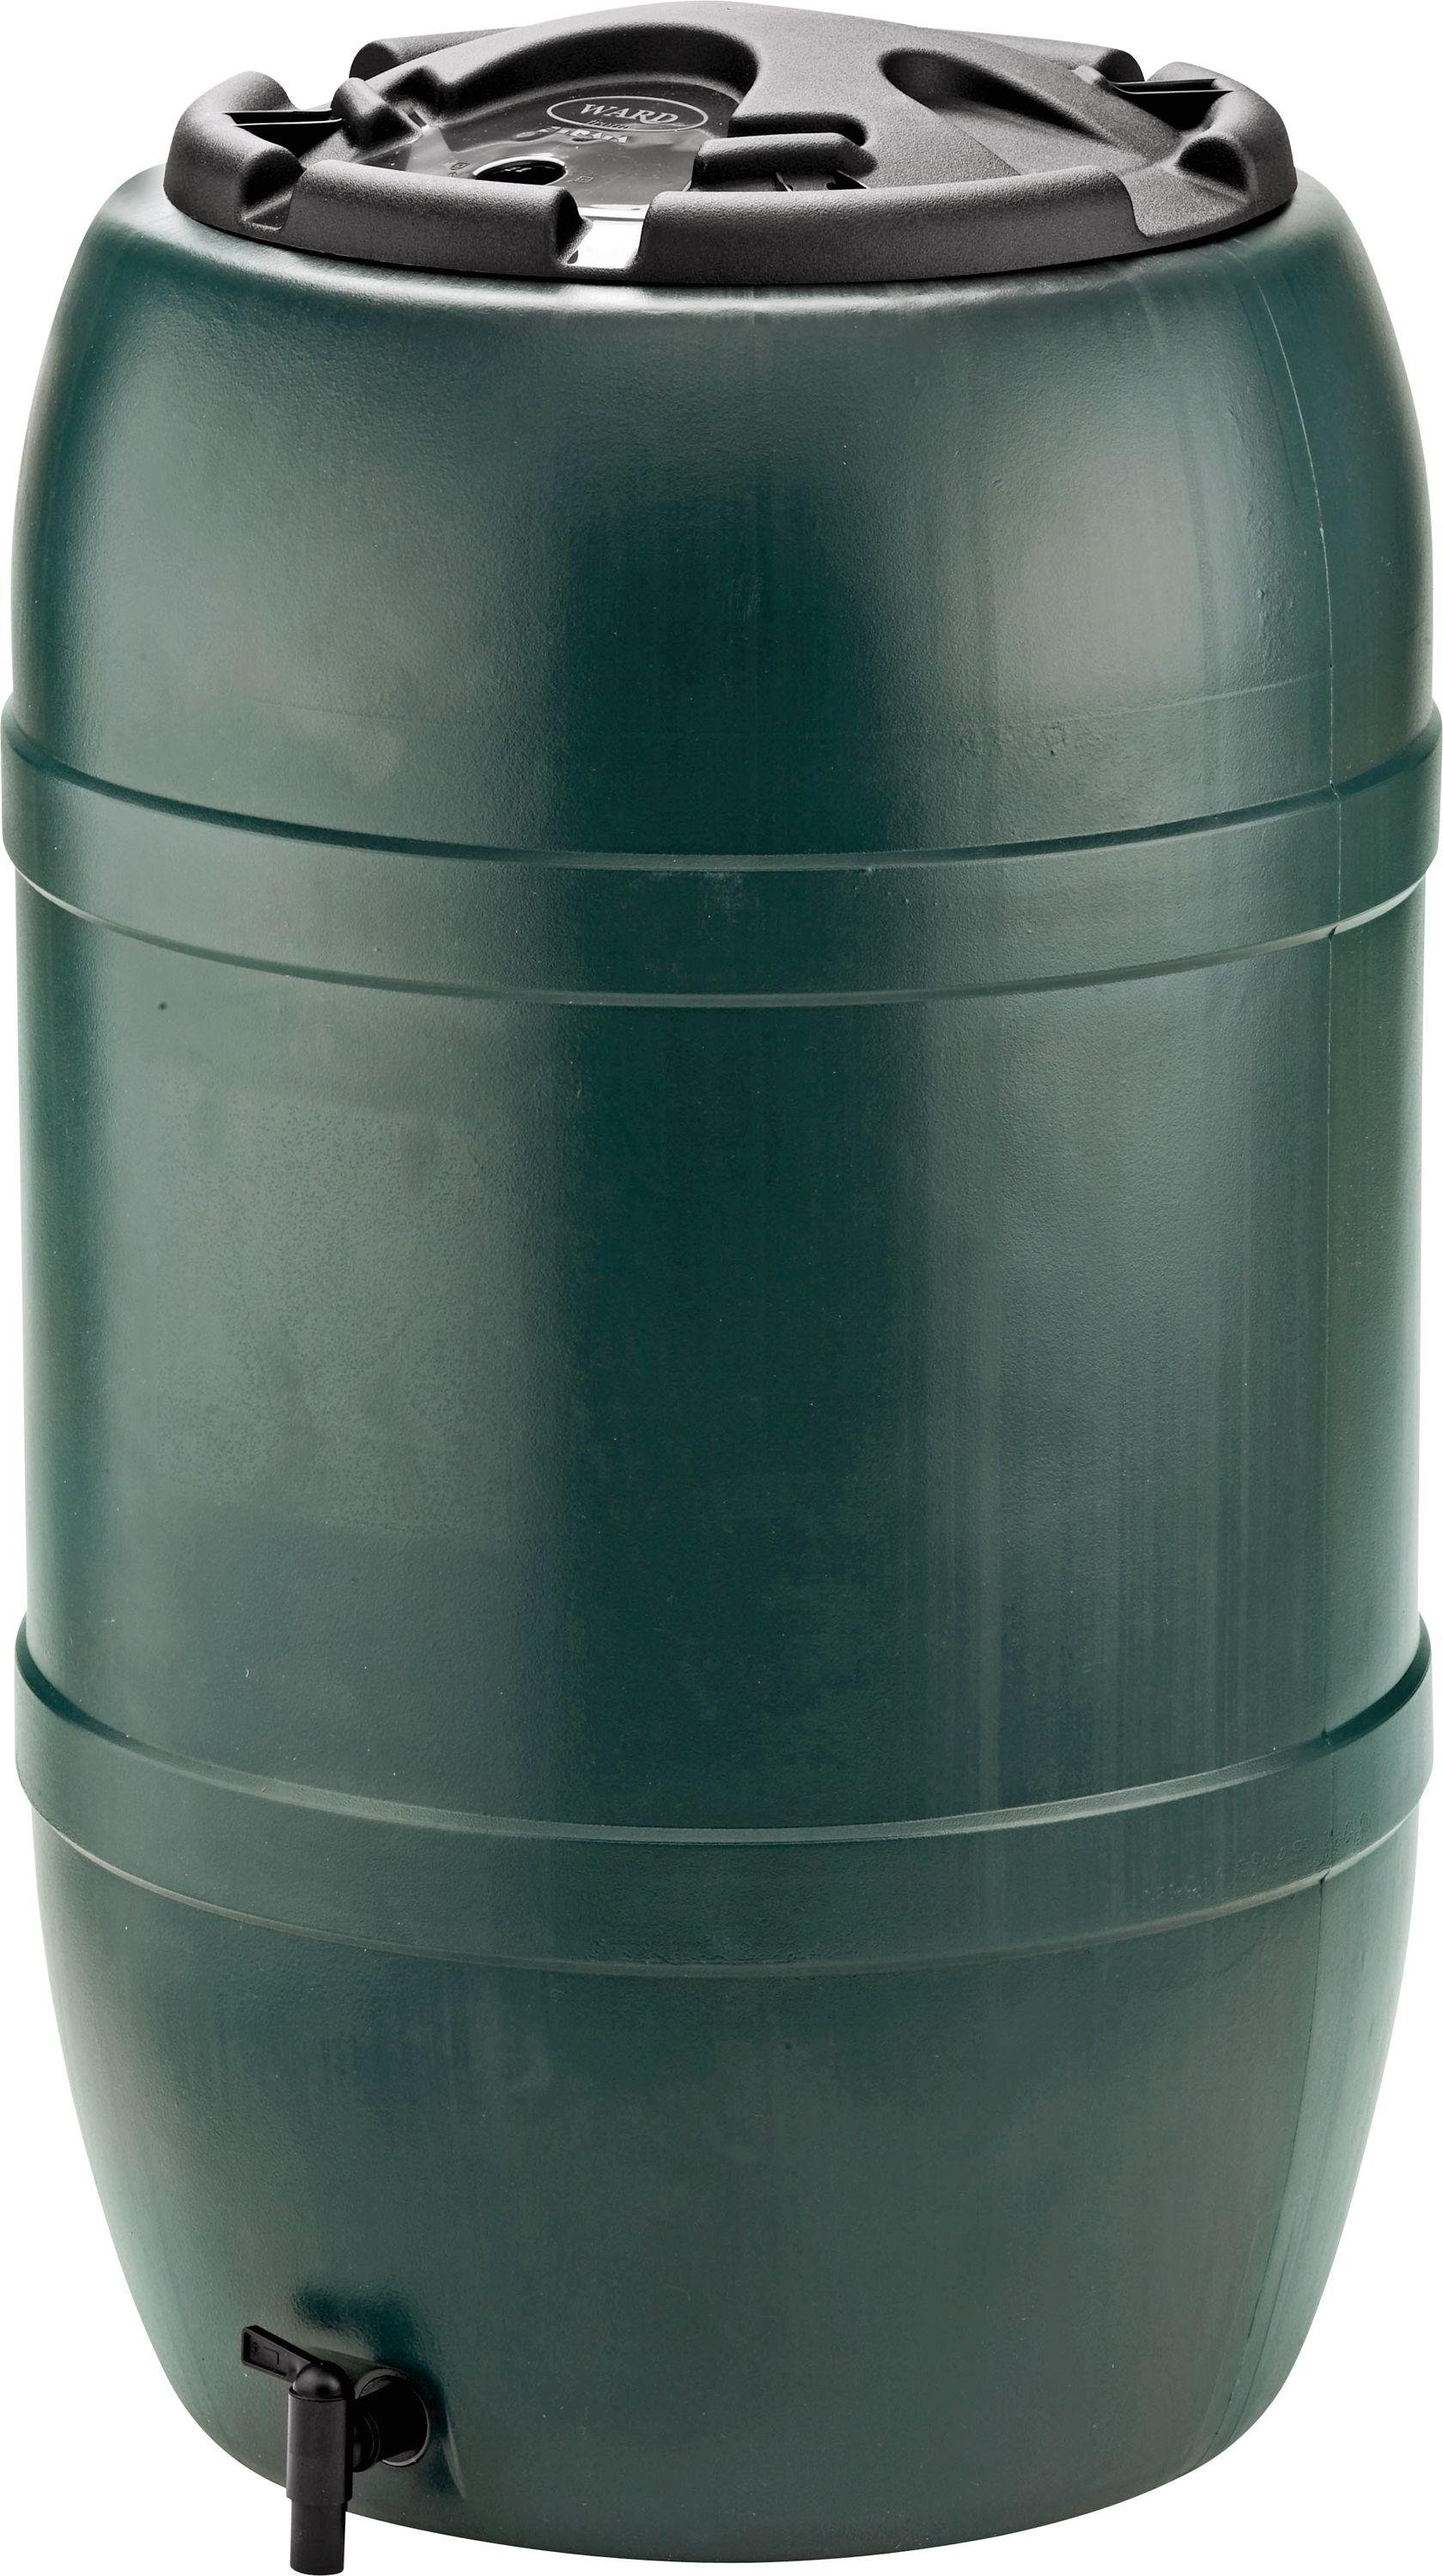 Бак черных вод. Бочка для воды 120л. Strata products Ltd Ward gn325 210l Water butt including tap and Lockable Lid - Black. Бак для полива. Пластмассовая бочка для полива.